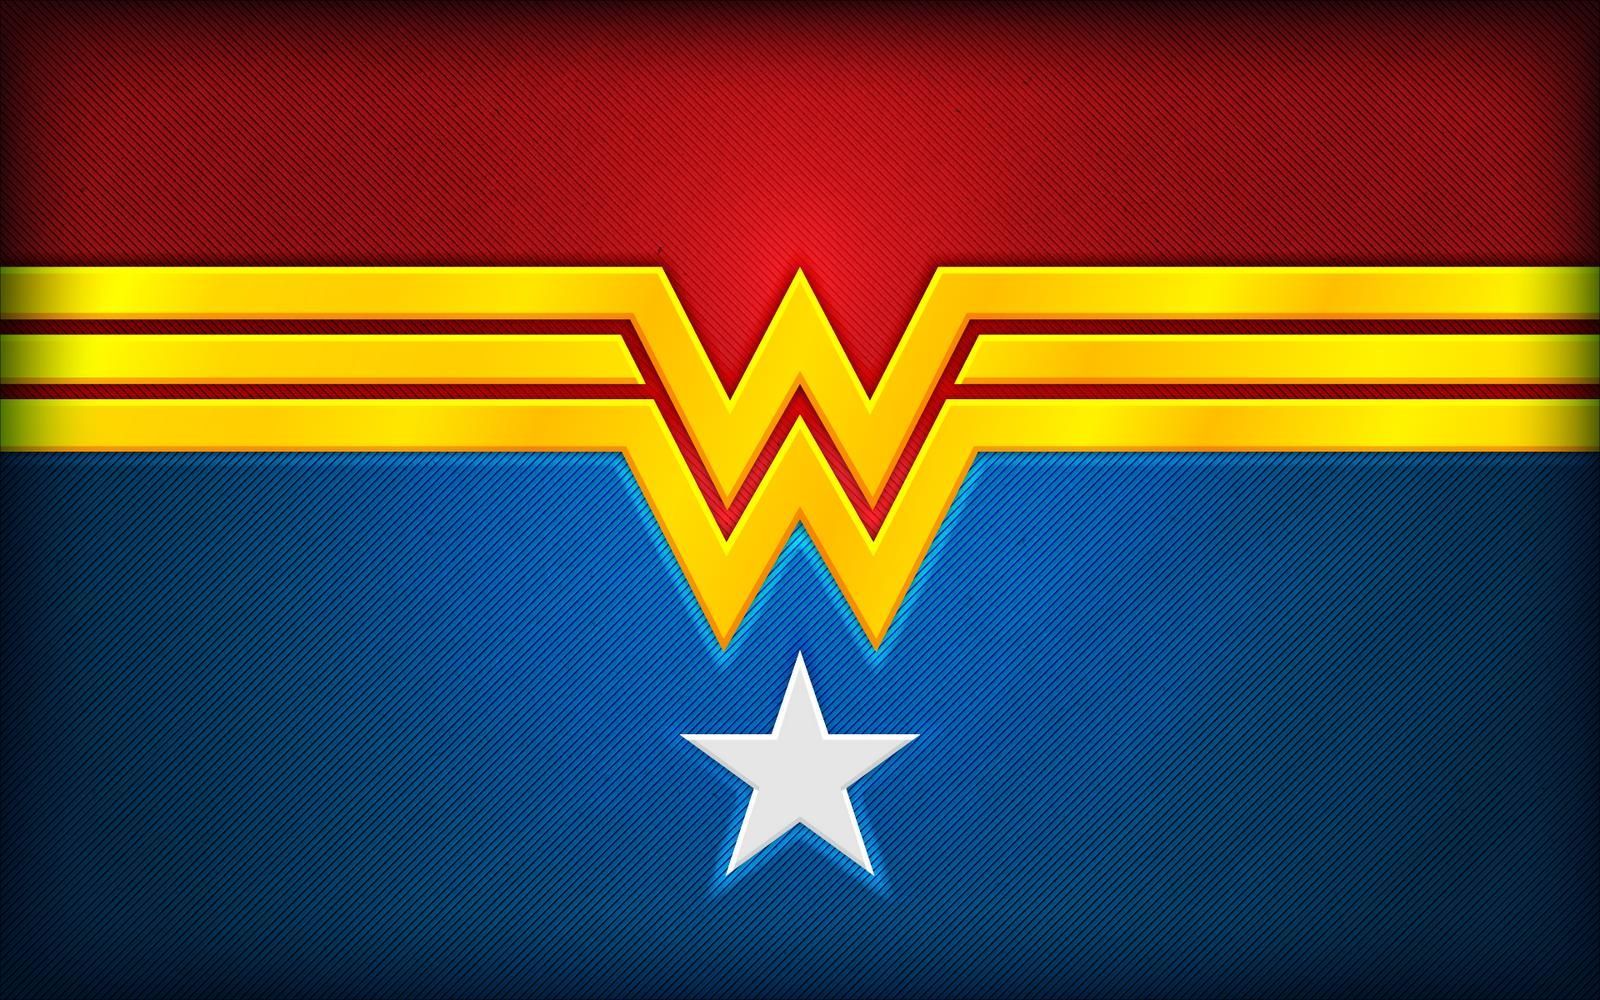 Wonder Woman Logo Wallpaper. Wonder woman fan art, Wonder woman logo, Abstract iphone wallpaper